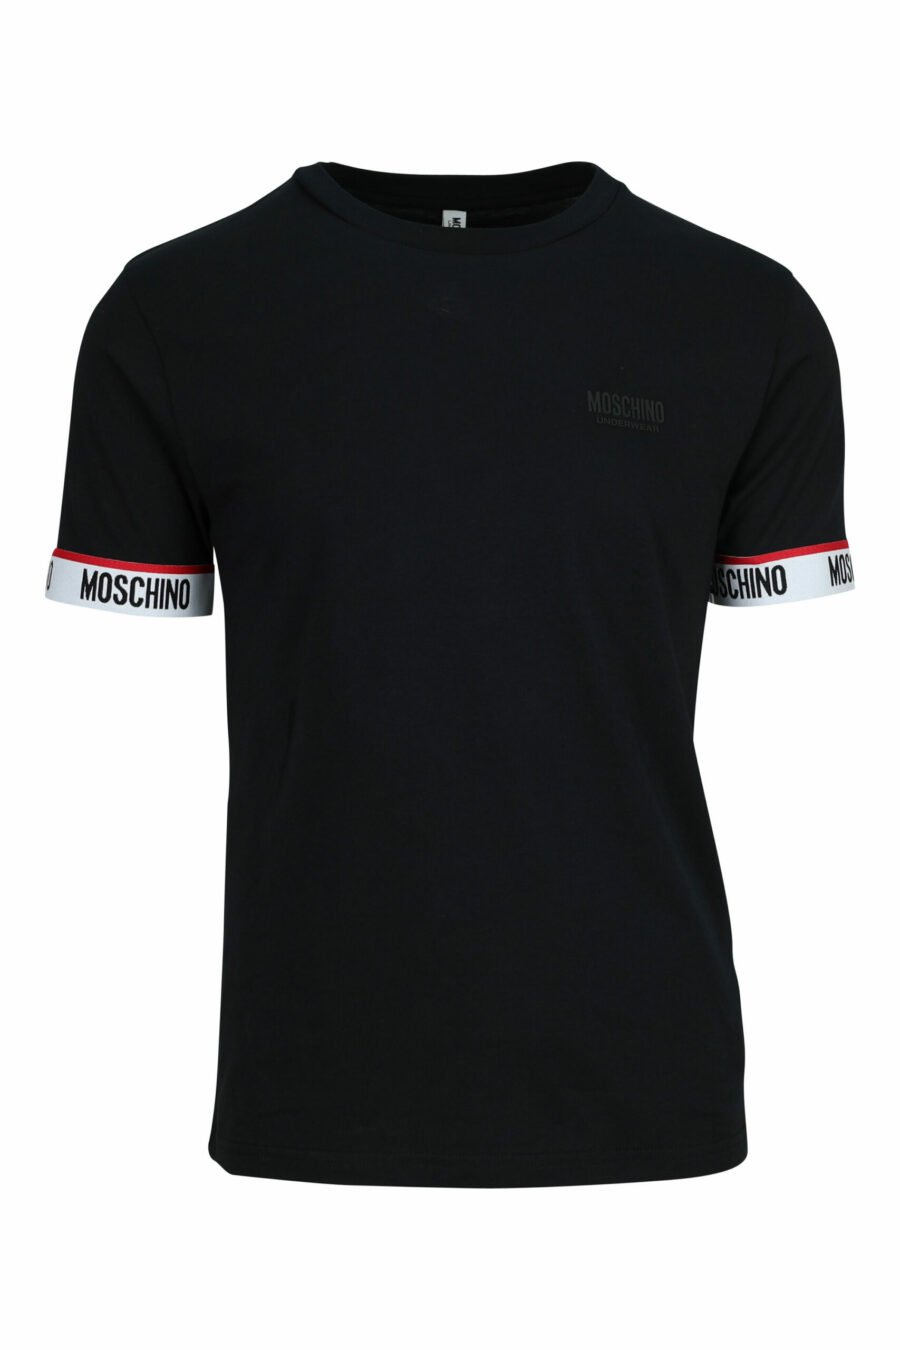 Camiseta negra con logo blanco en mangas - 667113604855 scaled